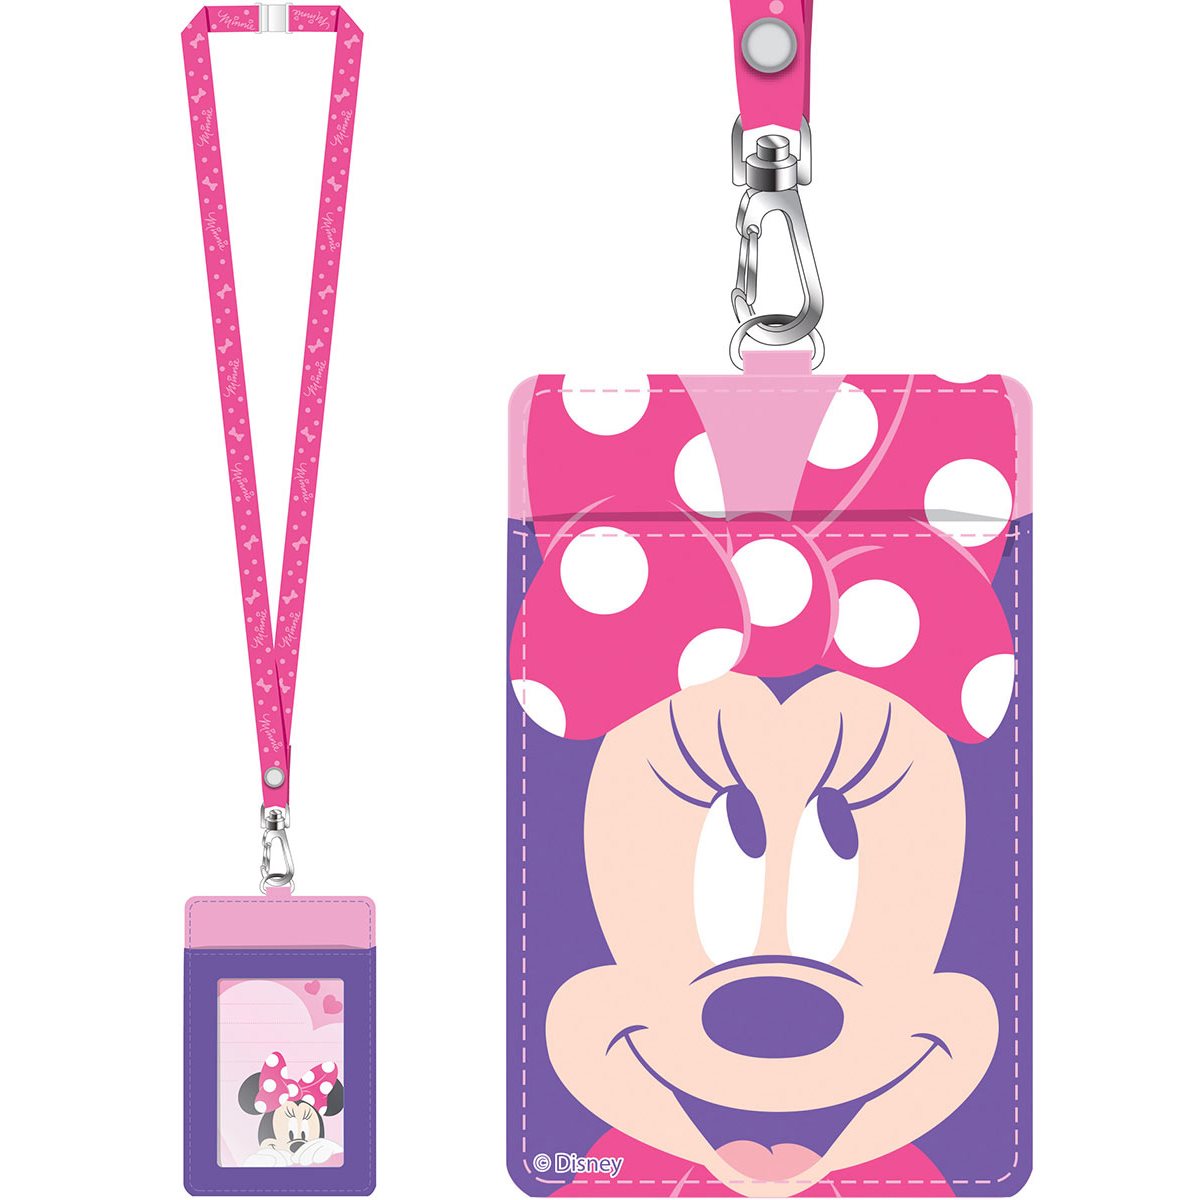 1pc Mickey Mouse Lanyard Avec Porte-carte, Gardez Votre Carte D